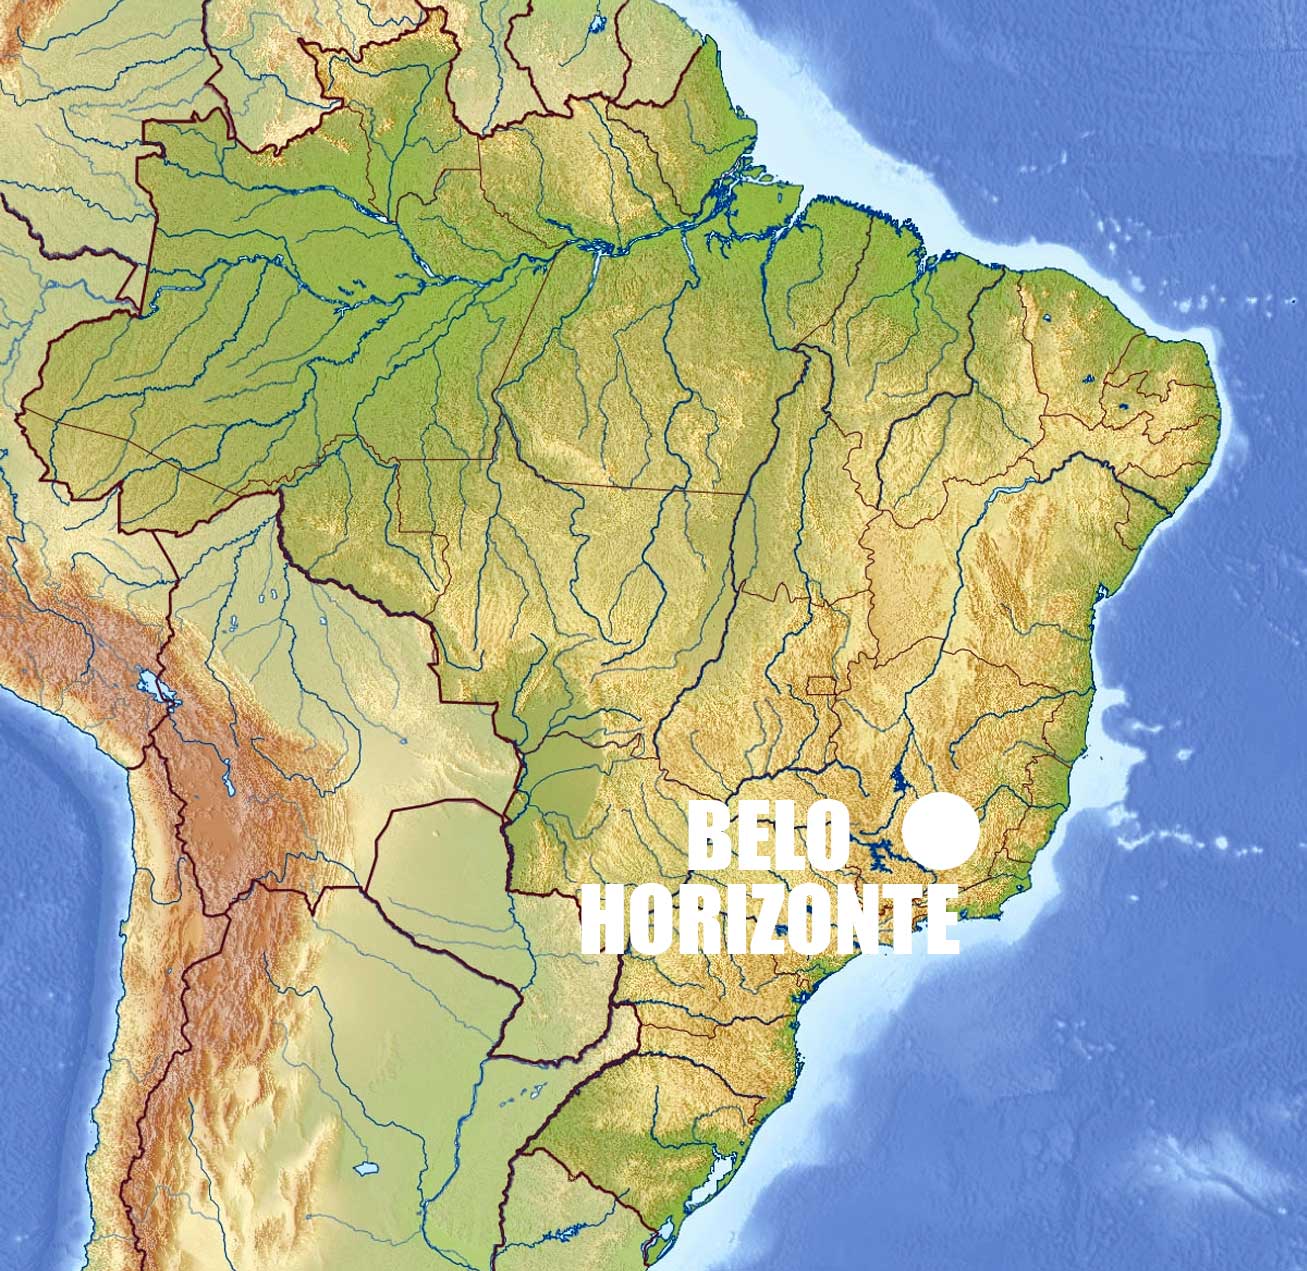 Location of Belo Horizonte on Brazil Map